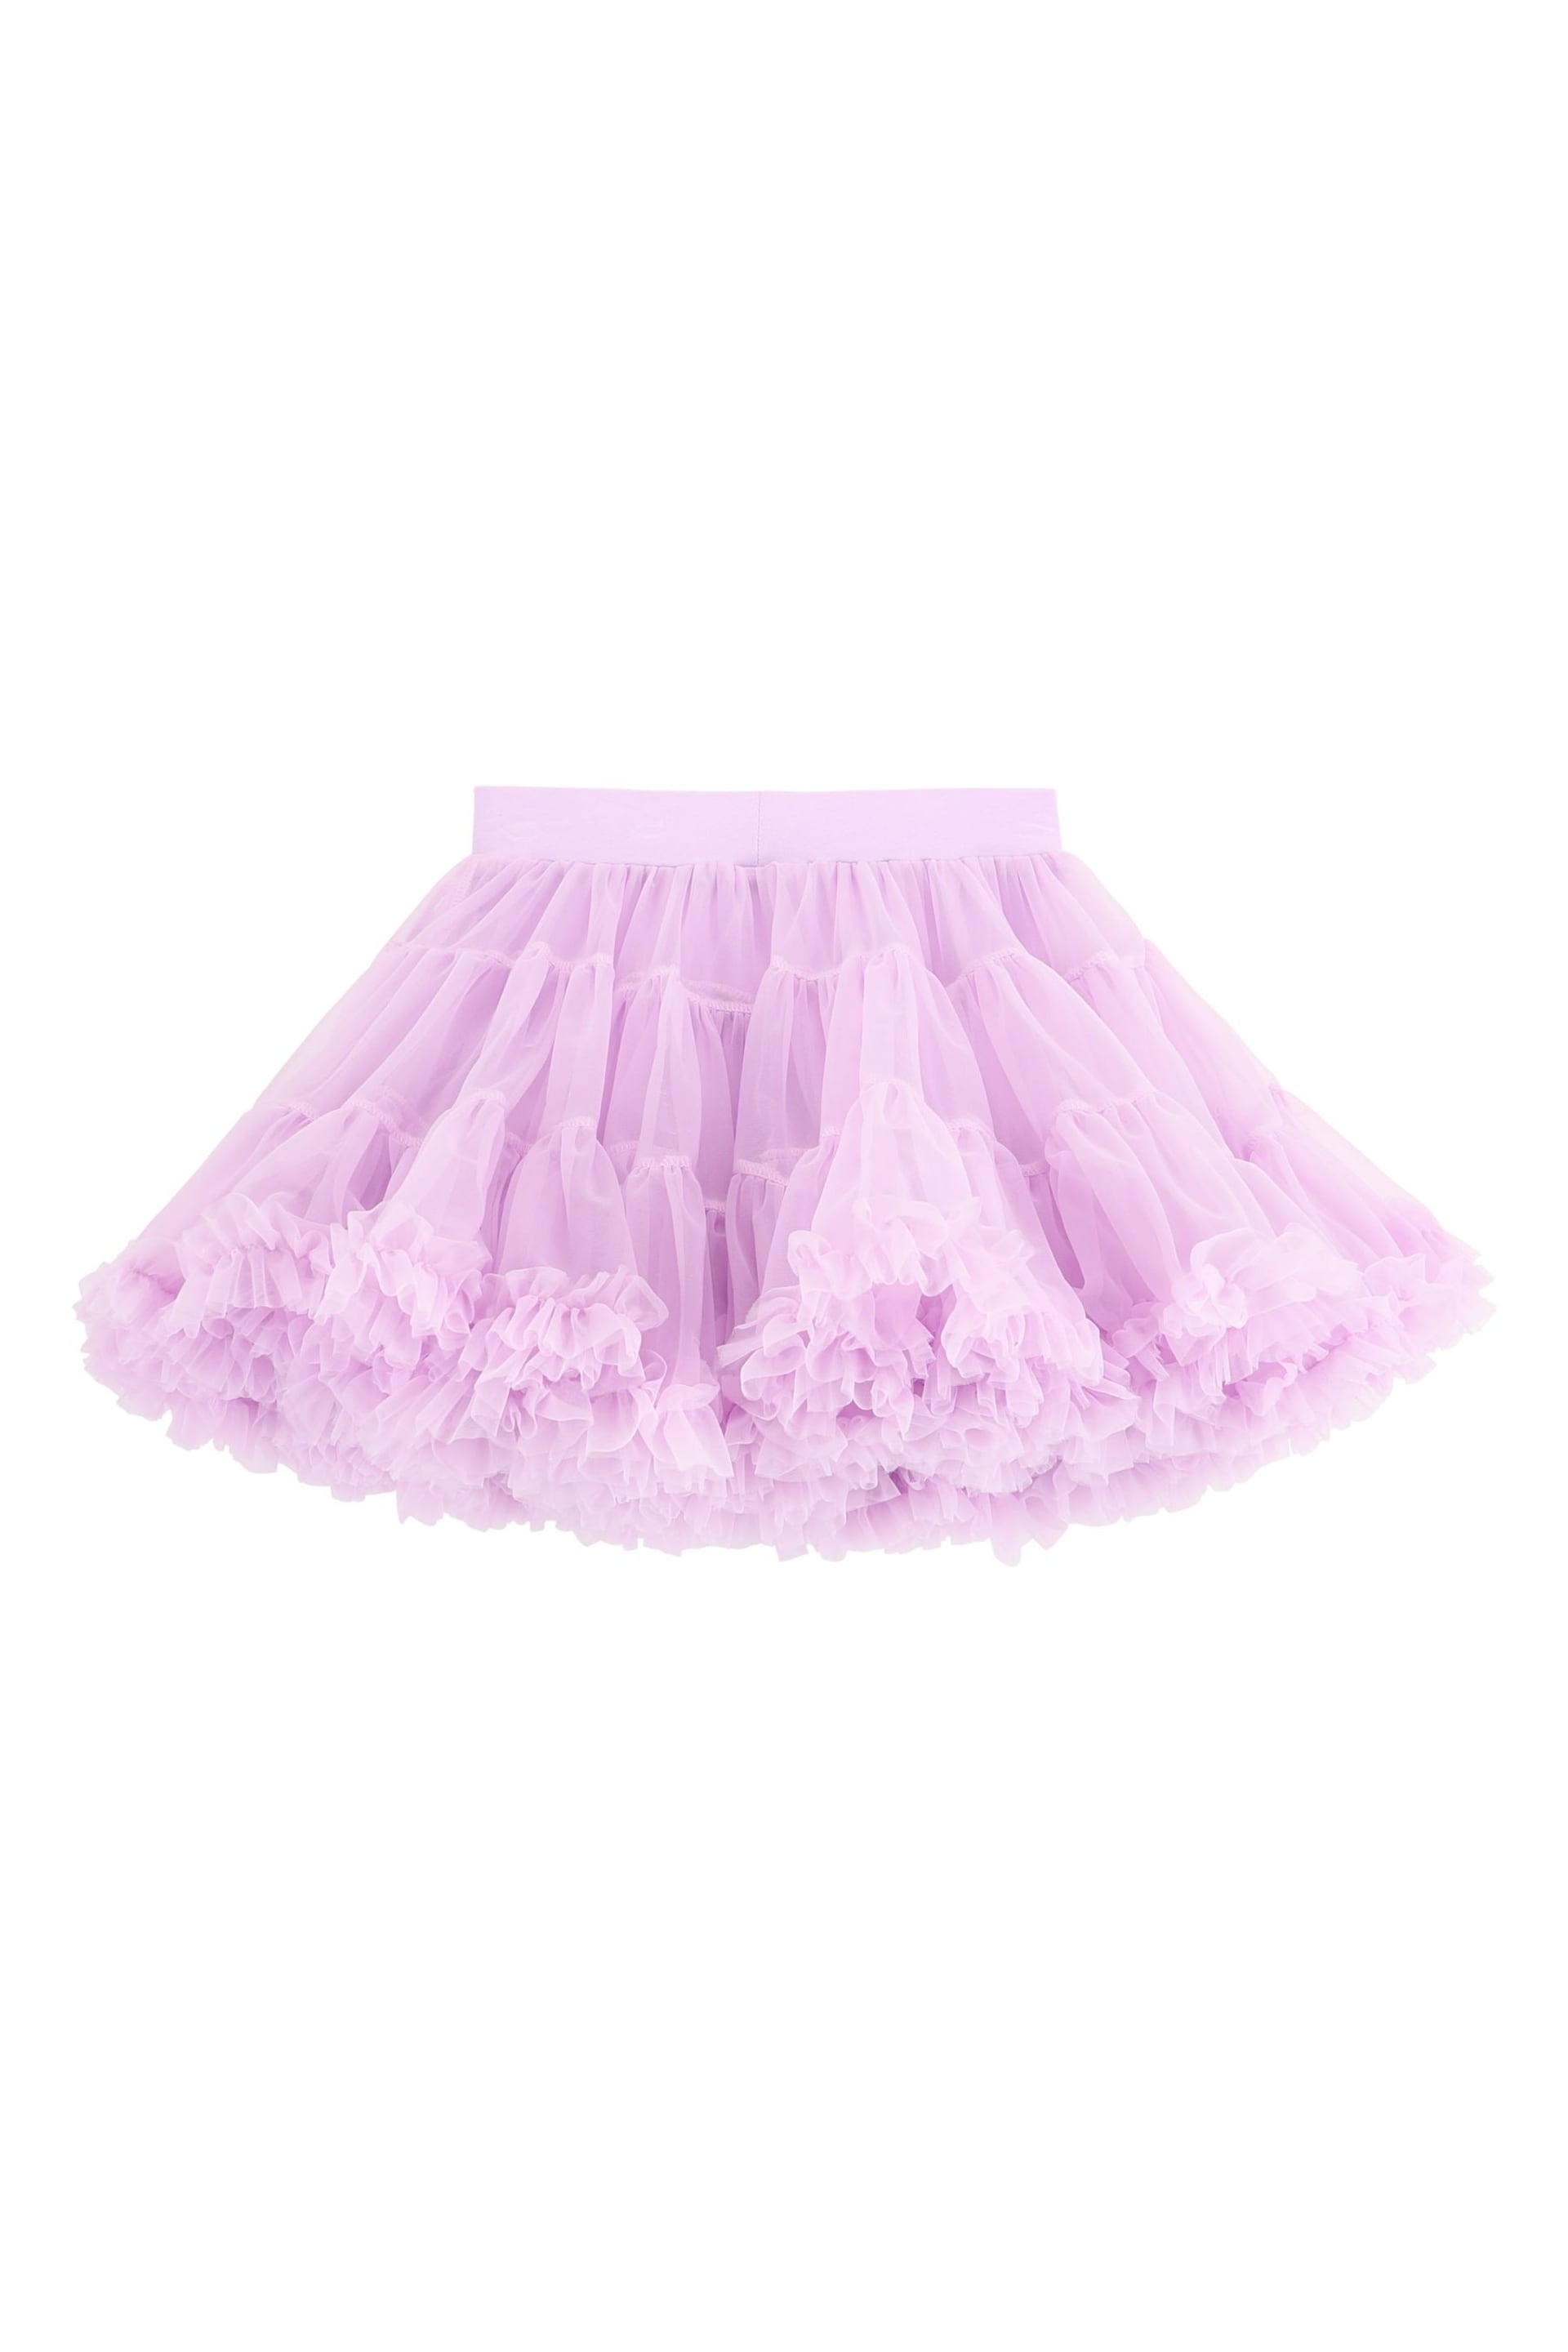 Angels Face Purple Pixie Tutu Skirt - Image 3 of 3